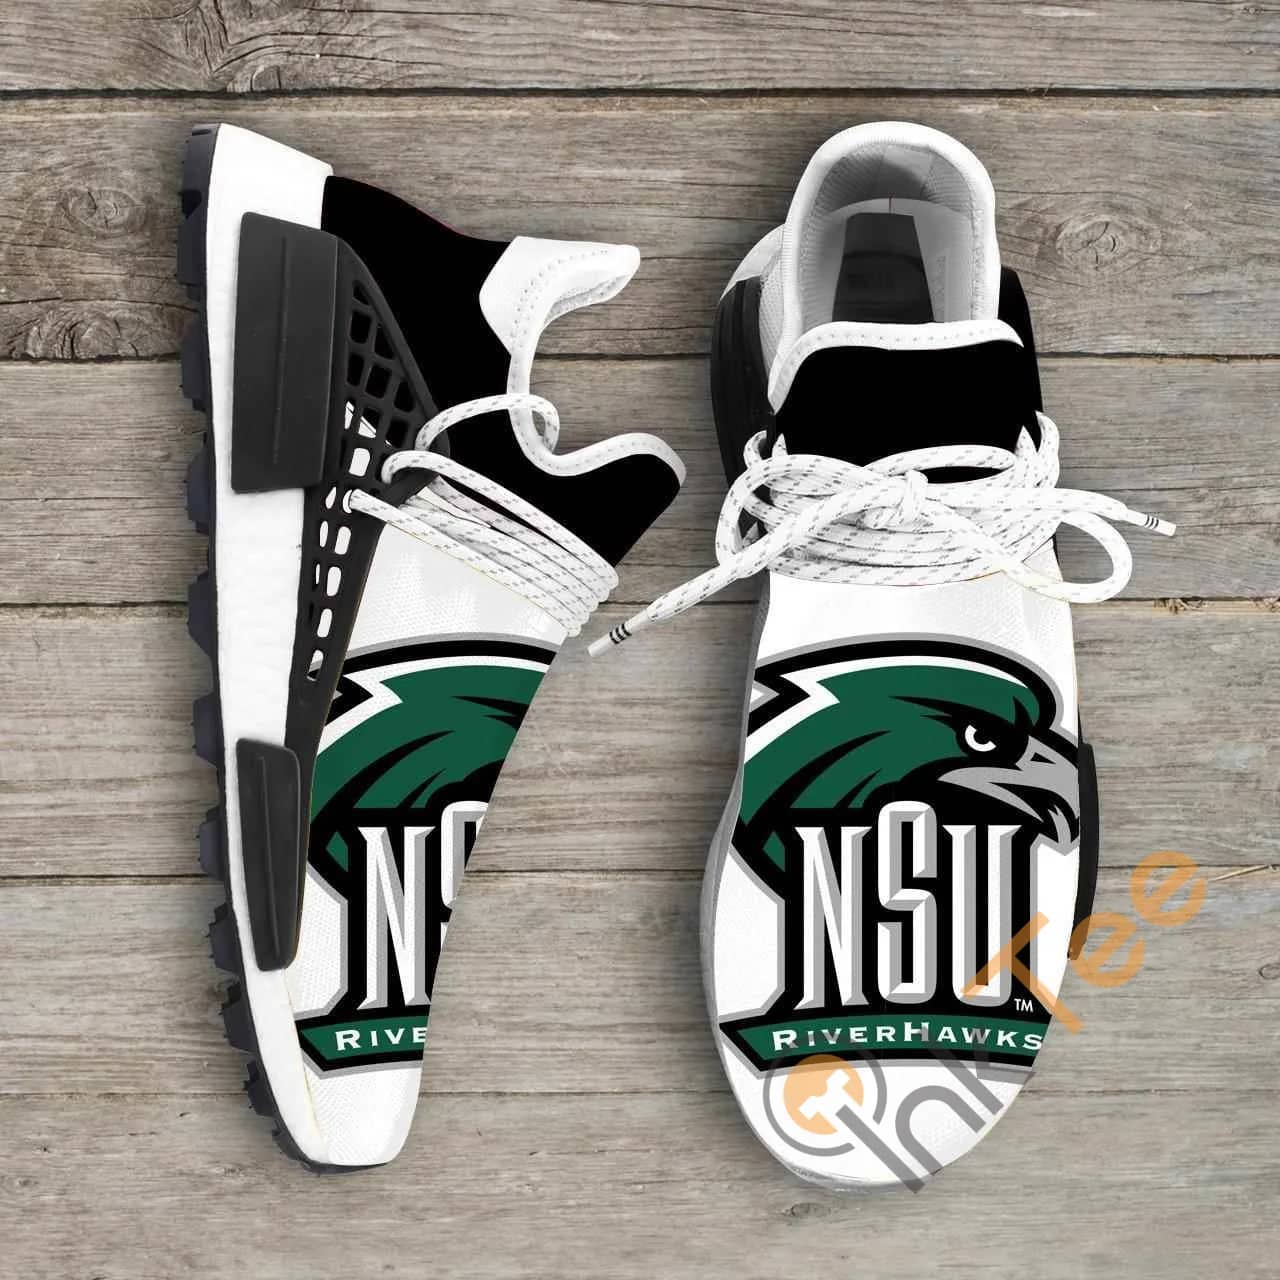 Northeastern State Riverhawks Ncaa NMD Human Shoes